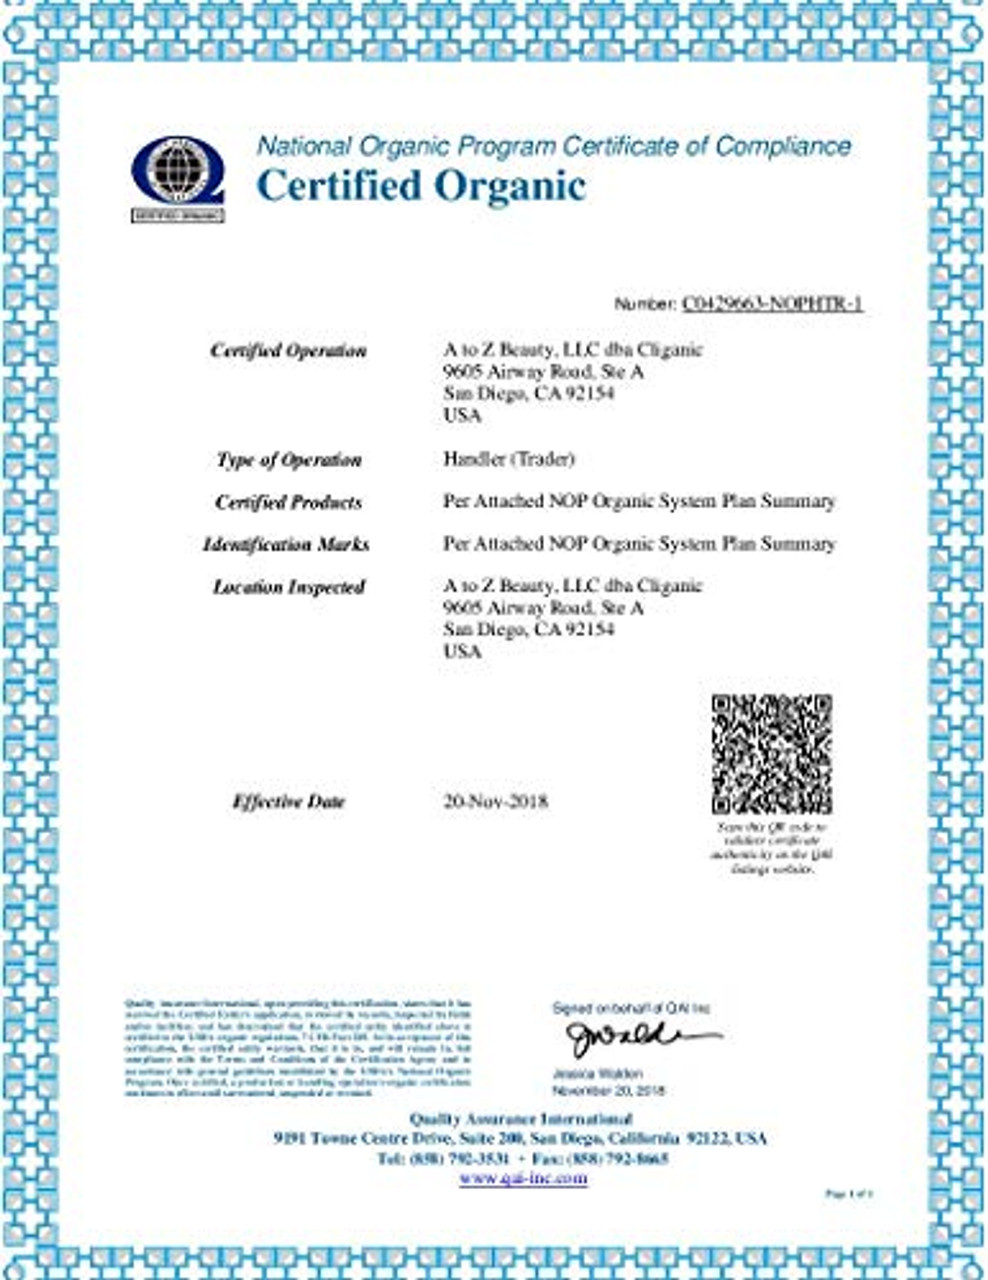 Cliganic USDA Organic Aromatherapy Essential Oils Set (Top 4), 100% Pure  Natural - Peppermint, Eucalyptus, Tea Tree & Orange